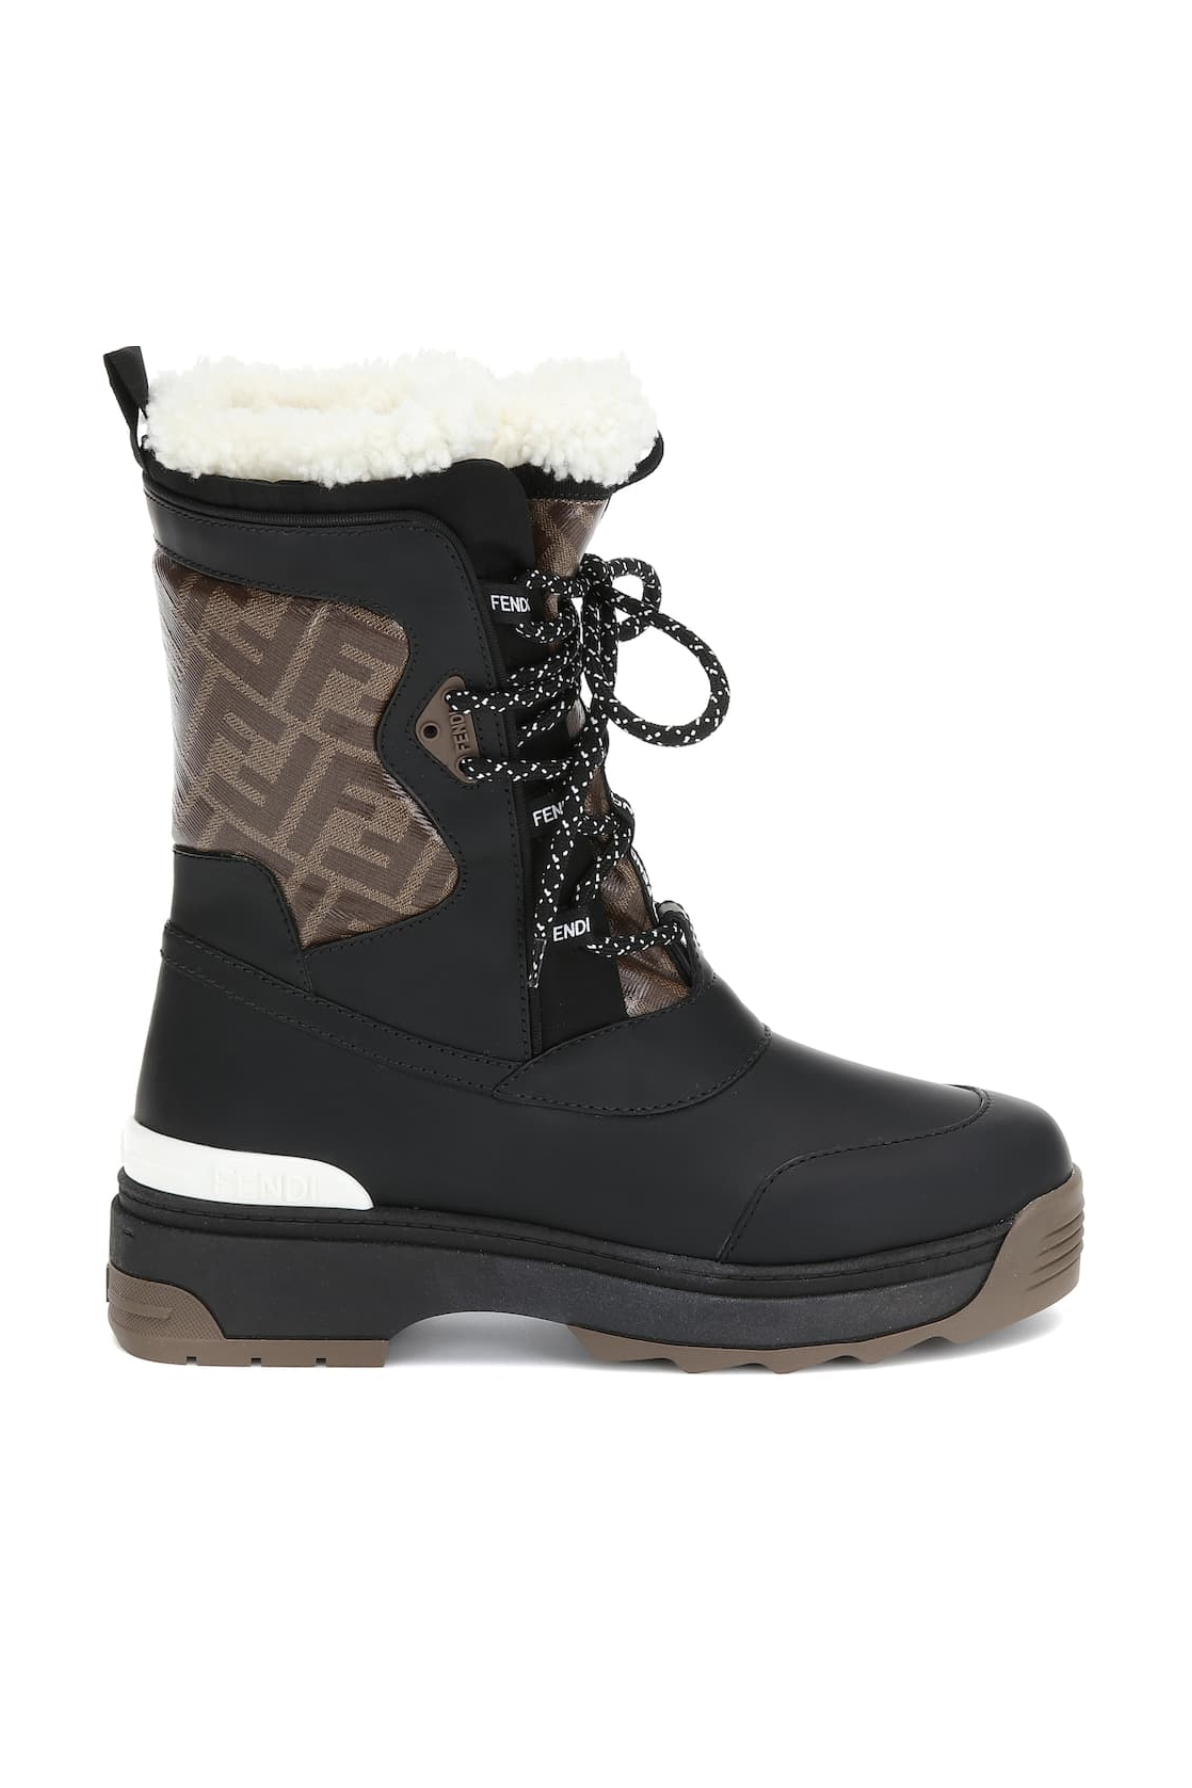 stylish snow boots womens